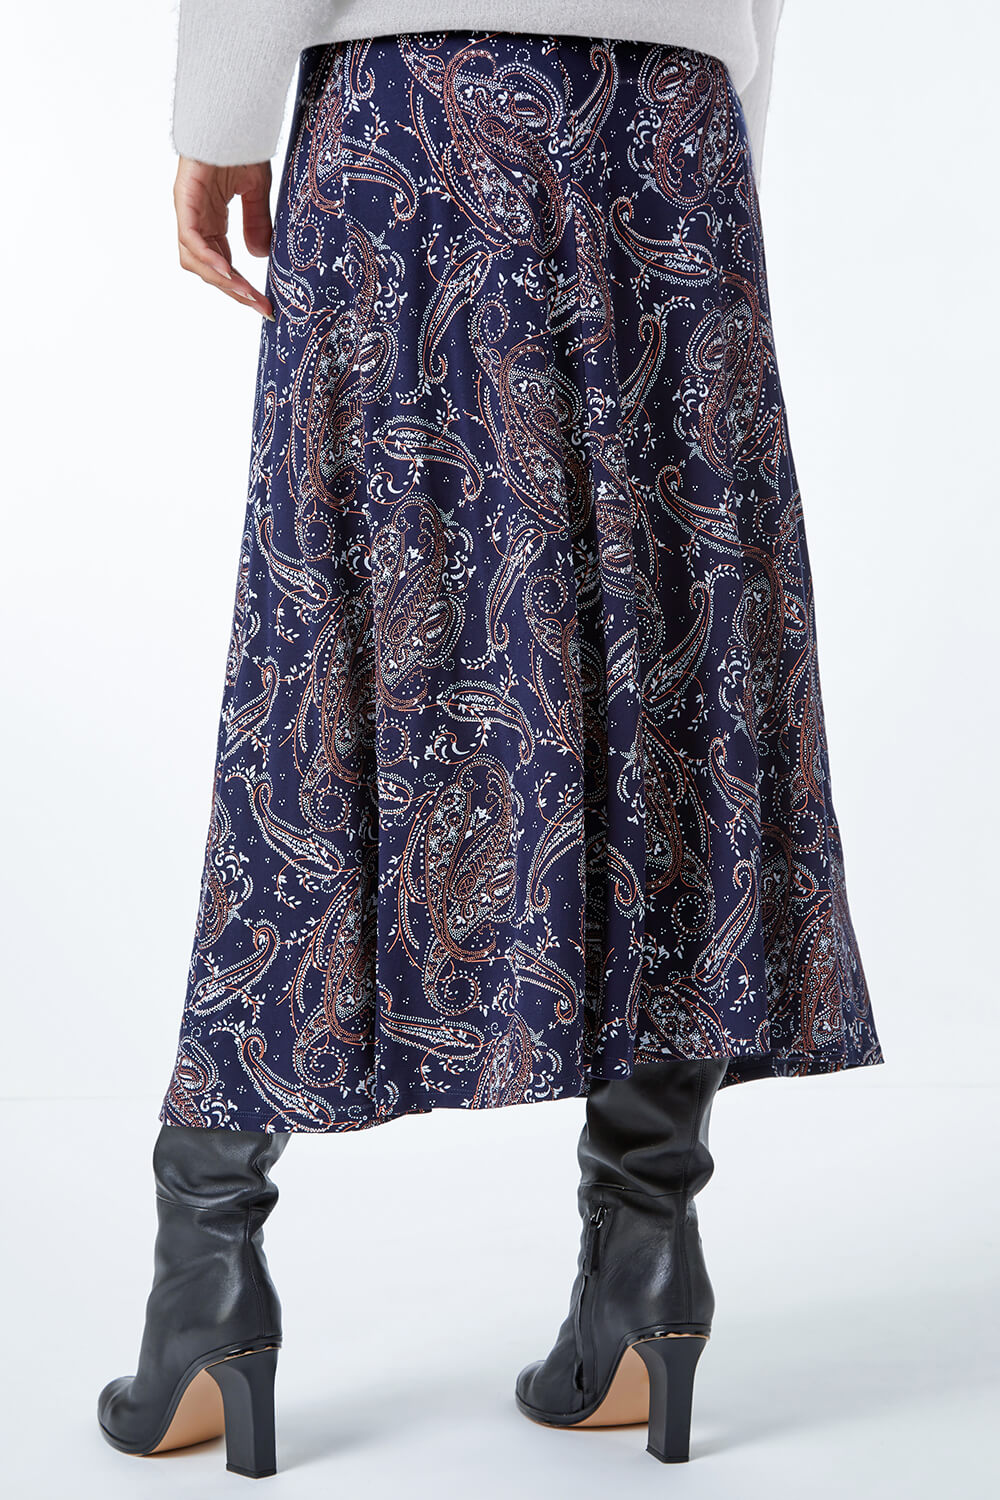 Midnight Blue Paisley Print Stretch Midi Skirt, Image 3 of 5